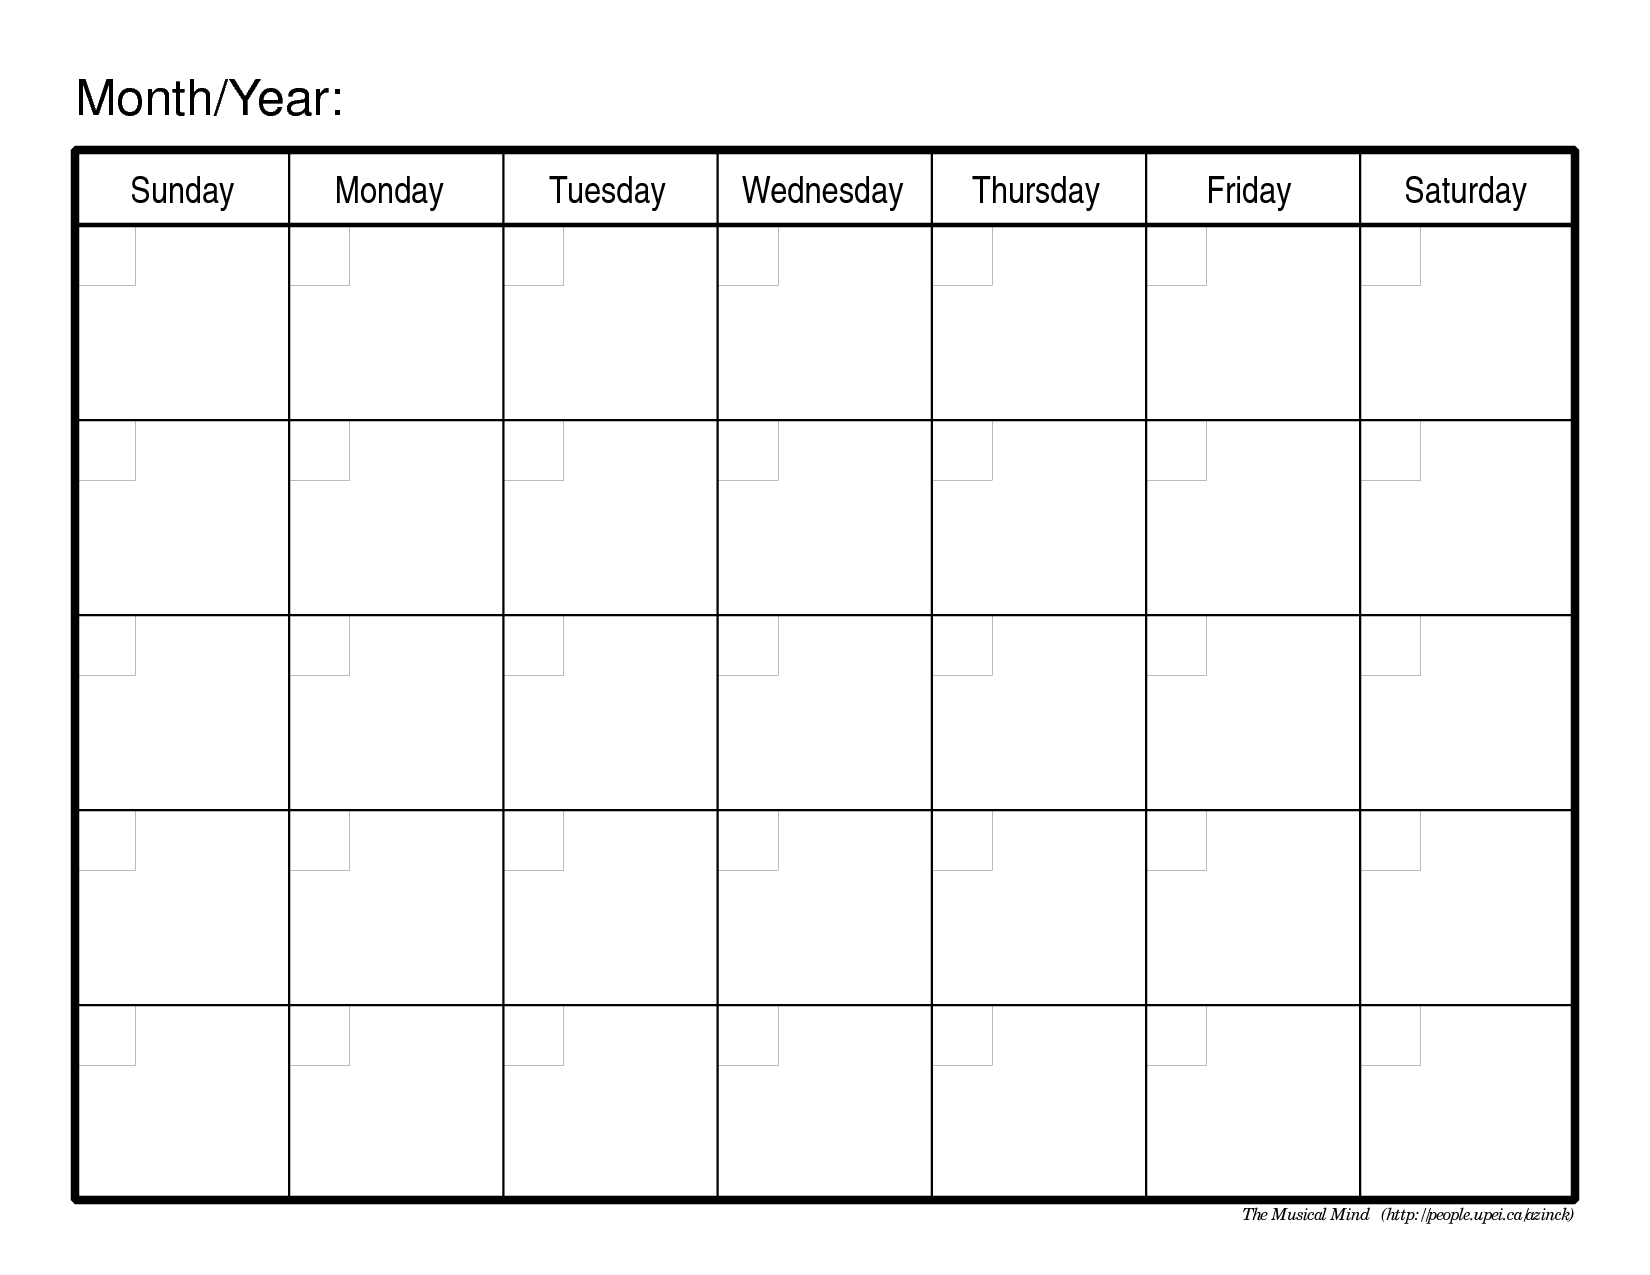 Microsoft Office Weekly Calendar Template. excel calendar 2015 (uk 